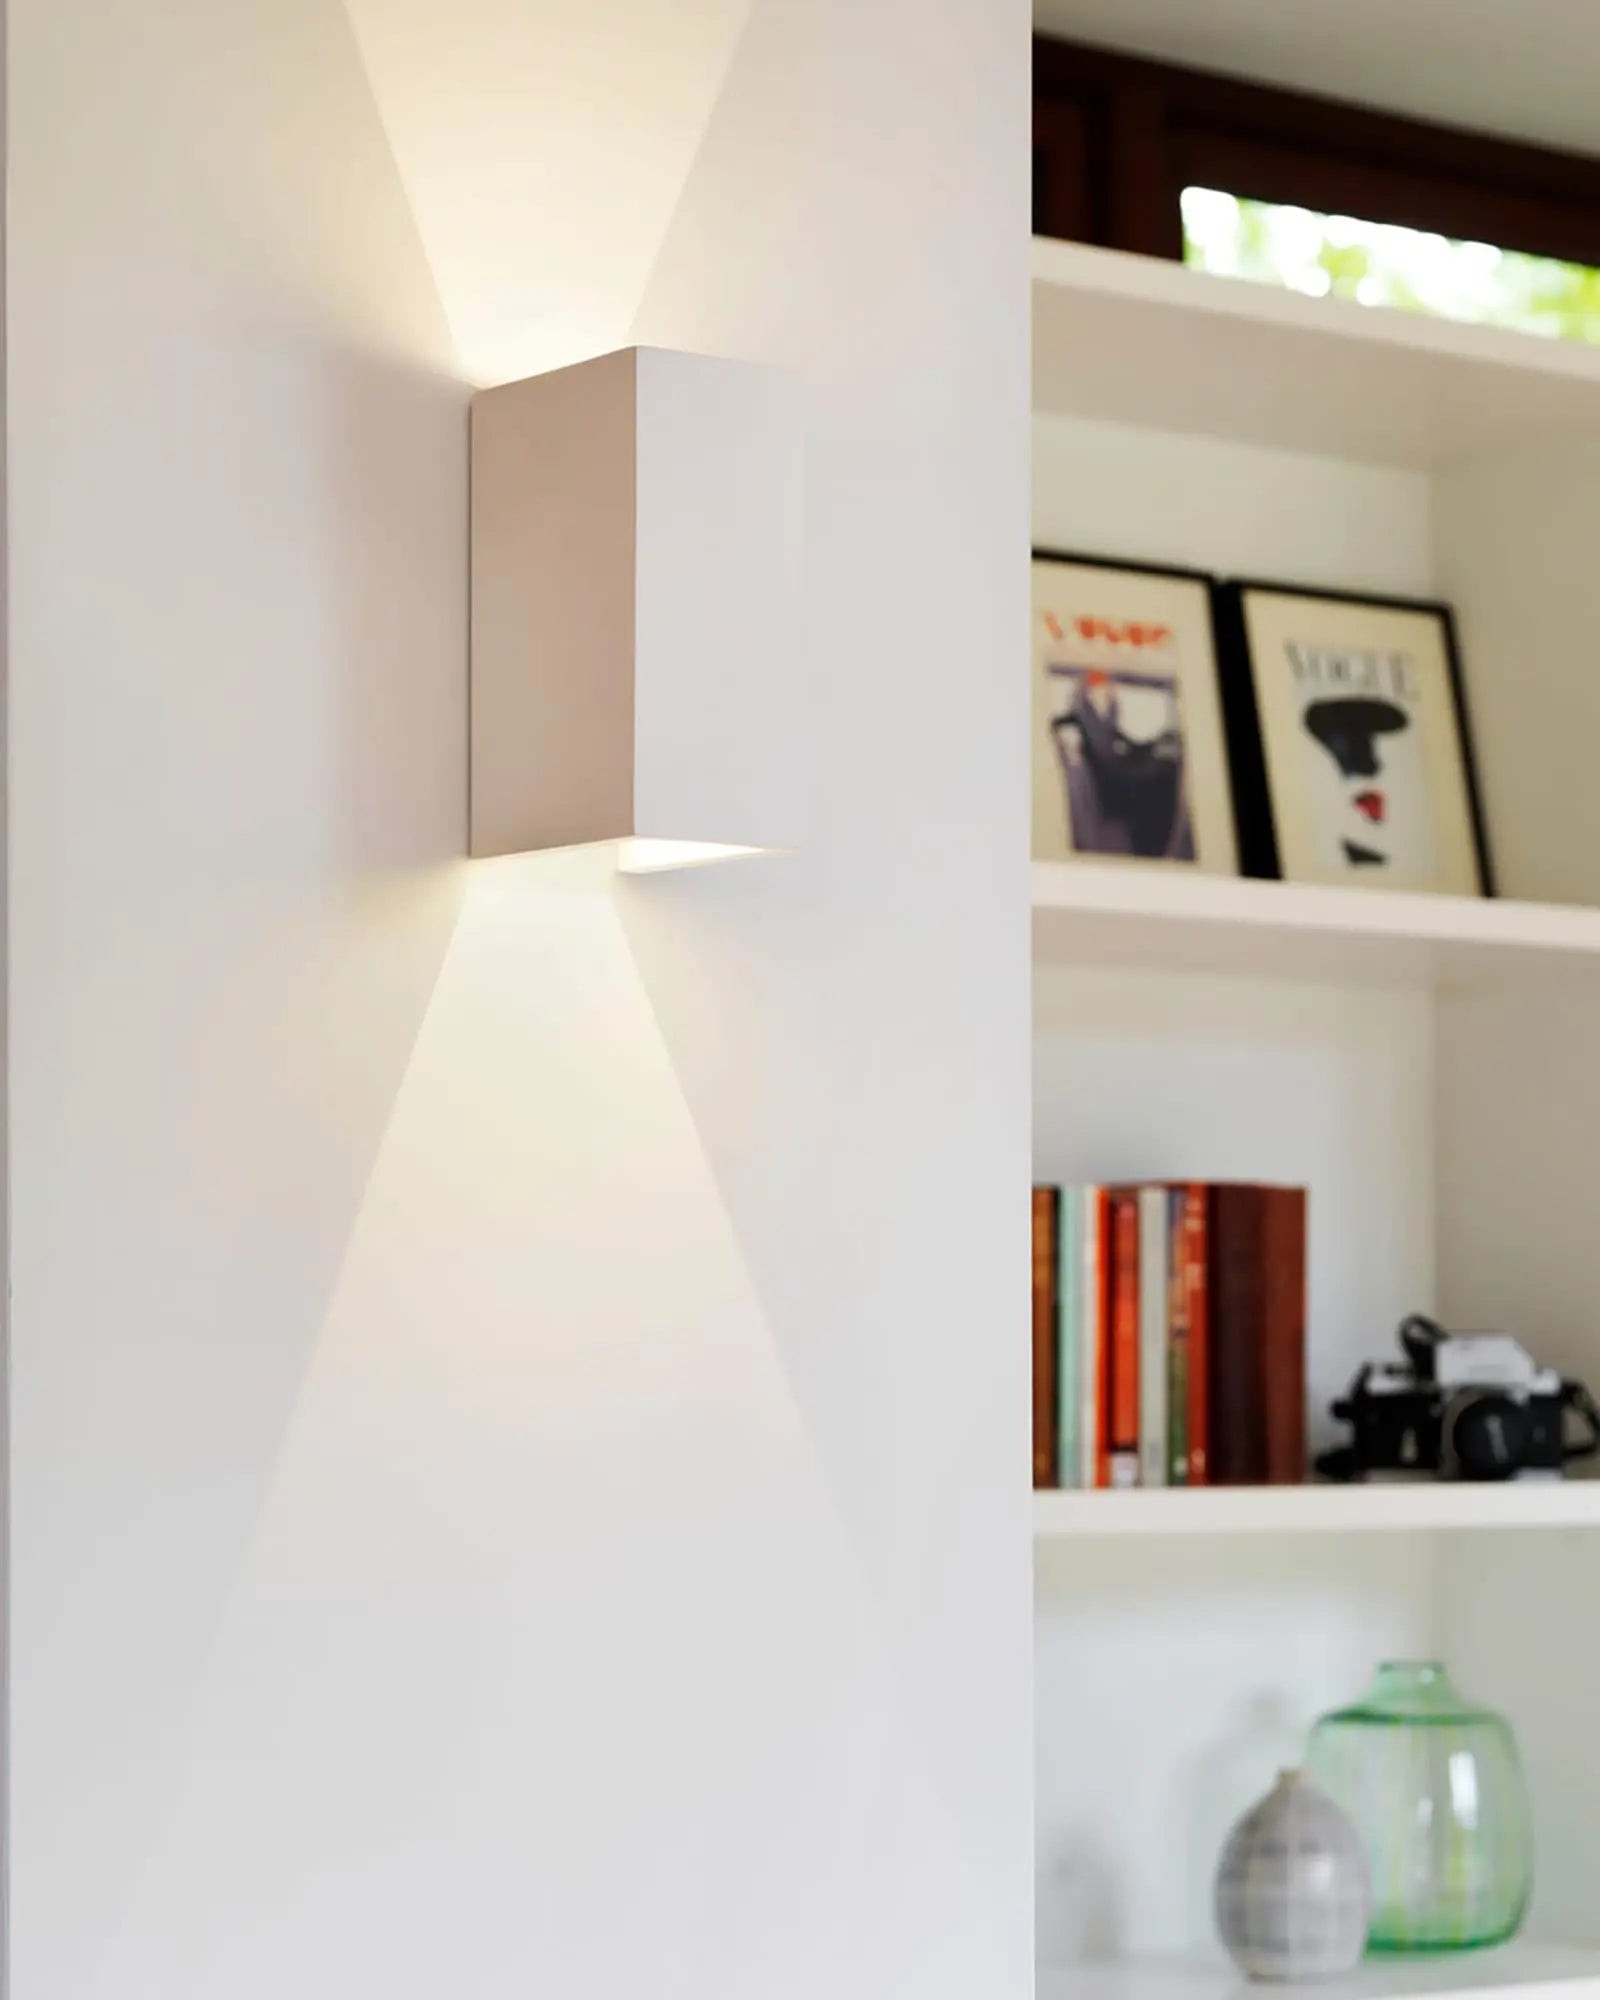 Parma 210 minimalistic plaster rectangular wall light lounge area beside a book shelf